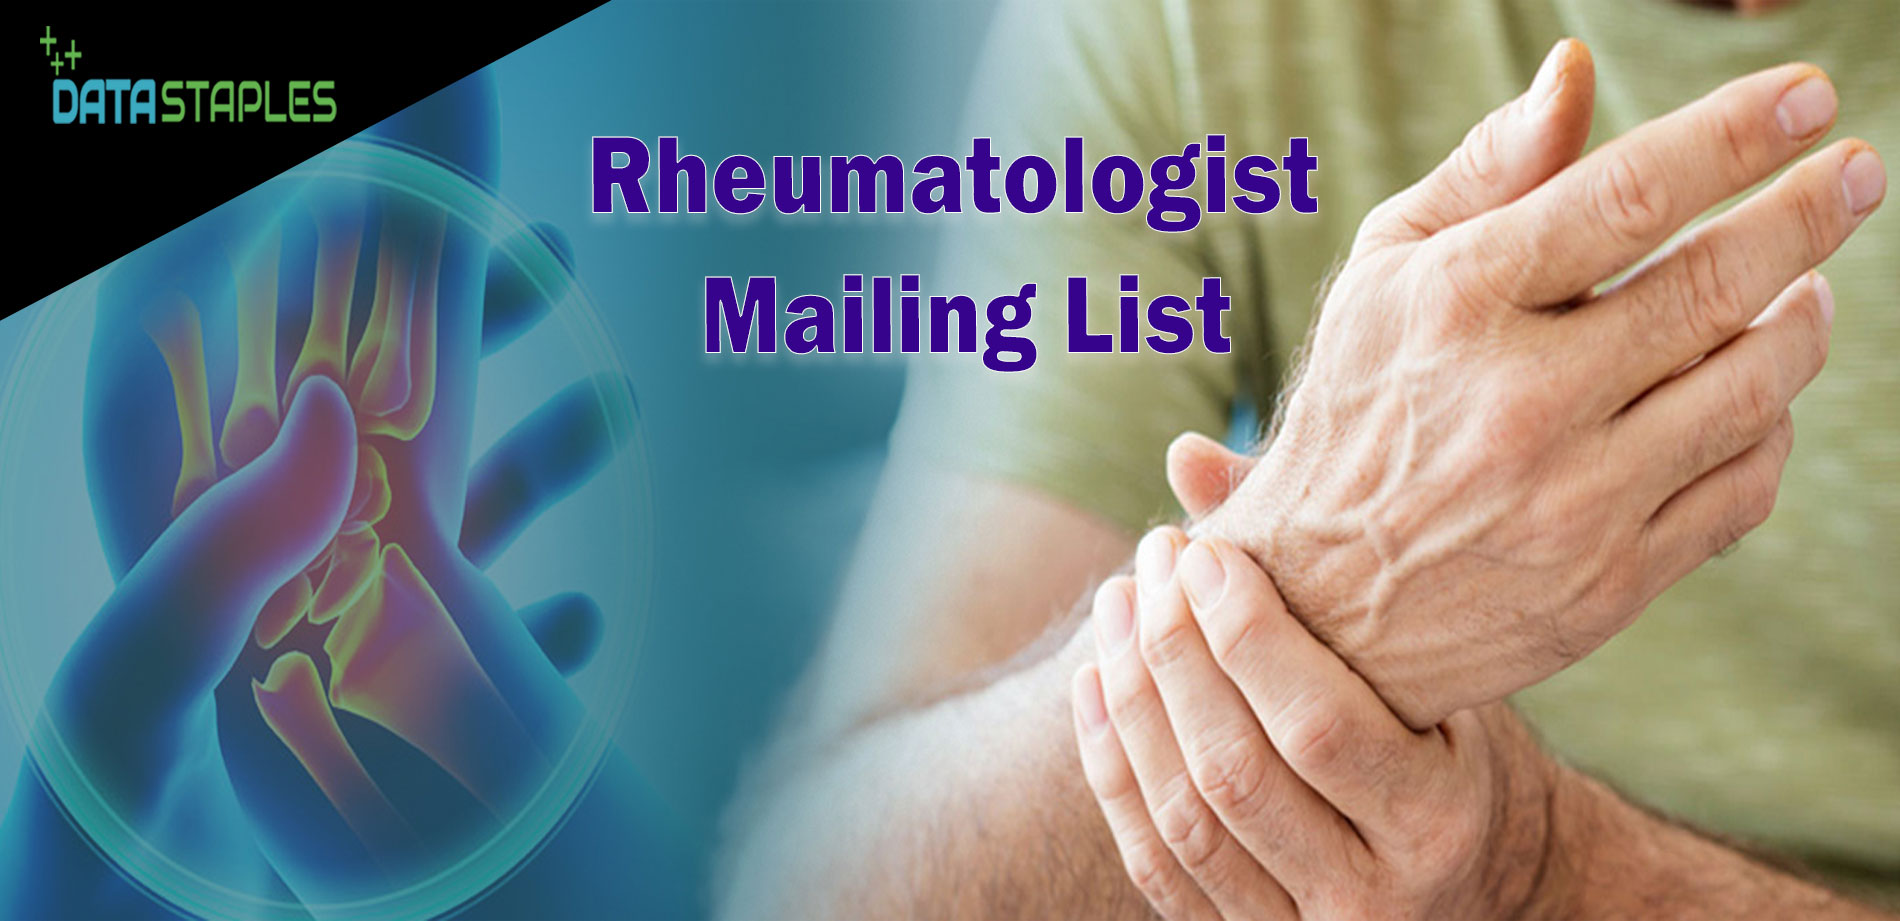 Rheumatologists Mailing List | DataStaples